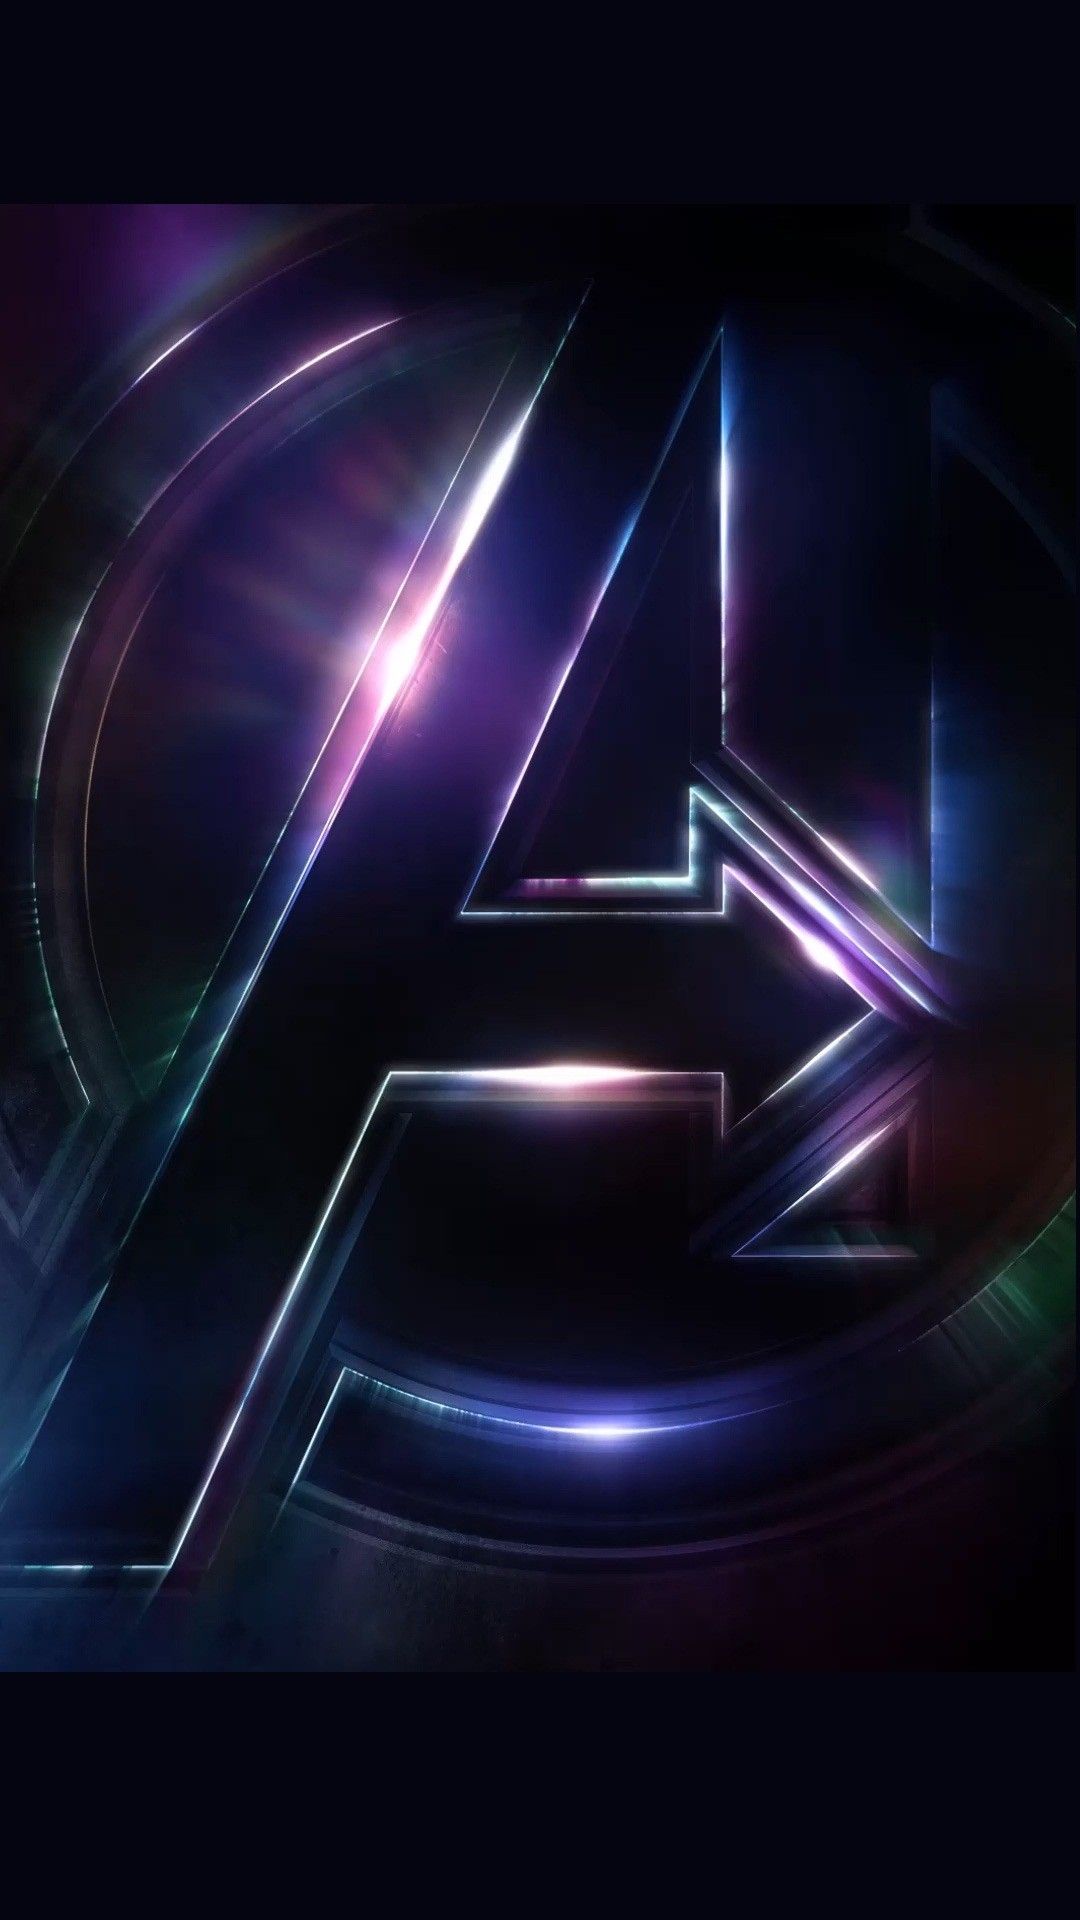 Avengers Infinity War Android Wallpaper - fondos de pantalla de Android 2019